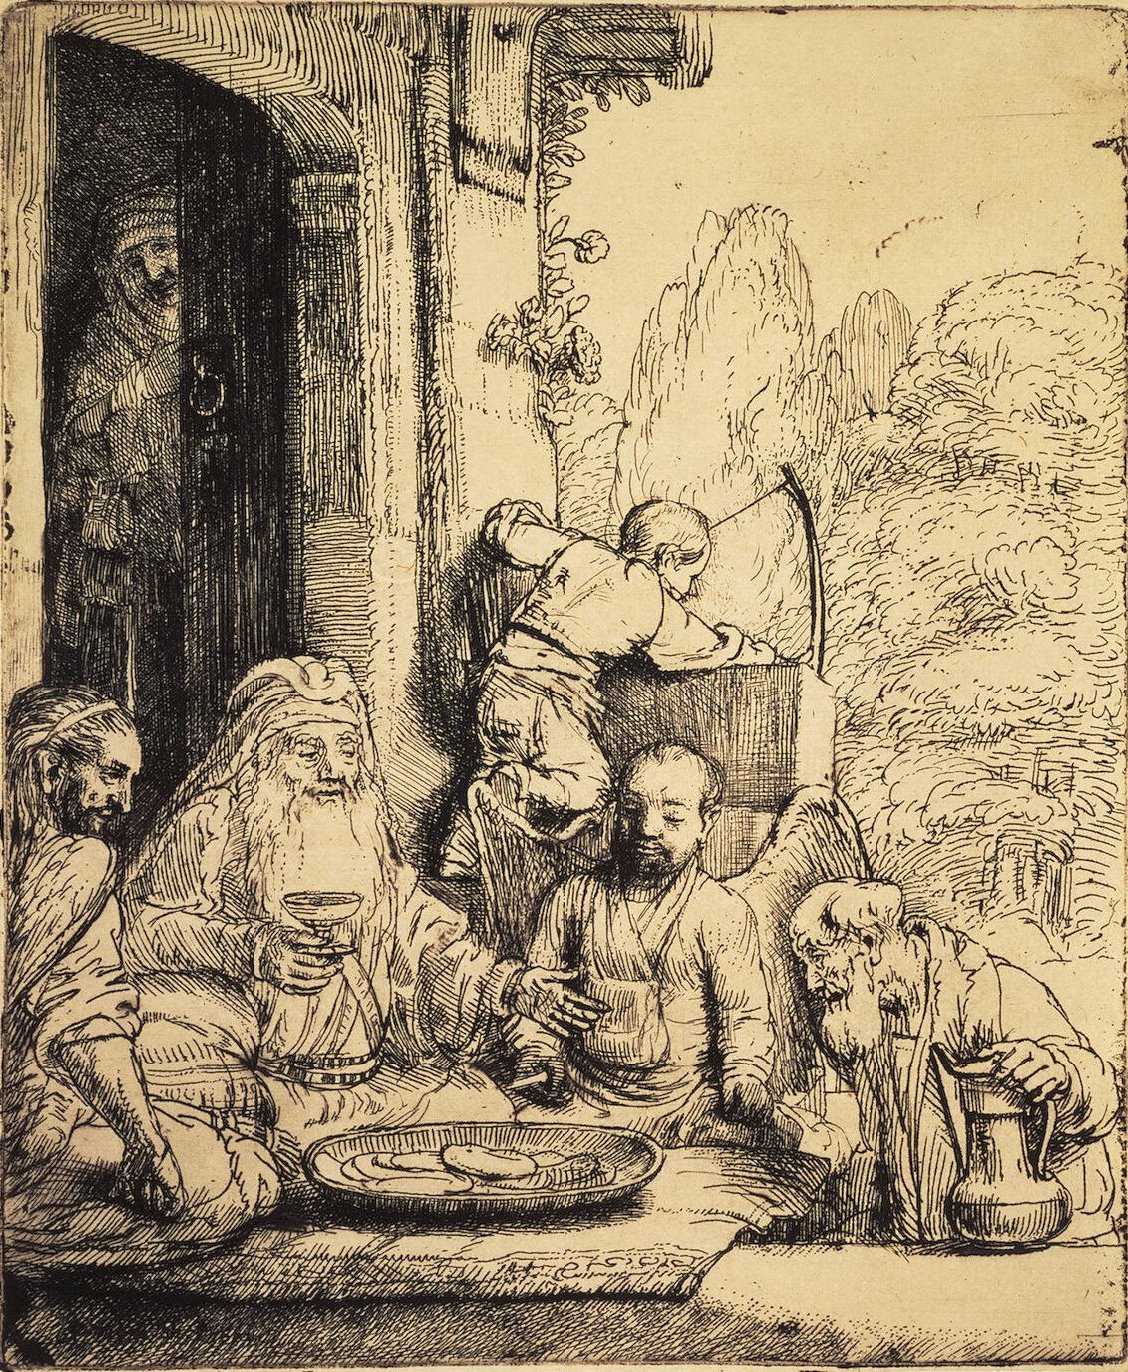 Рембрандт Харменс ван Рейн. "Авраам и три спутника". 1656.